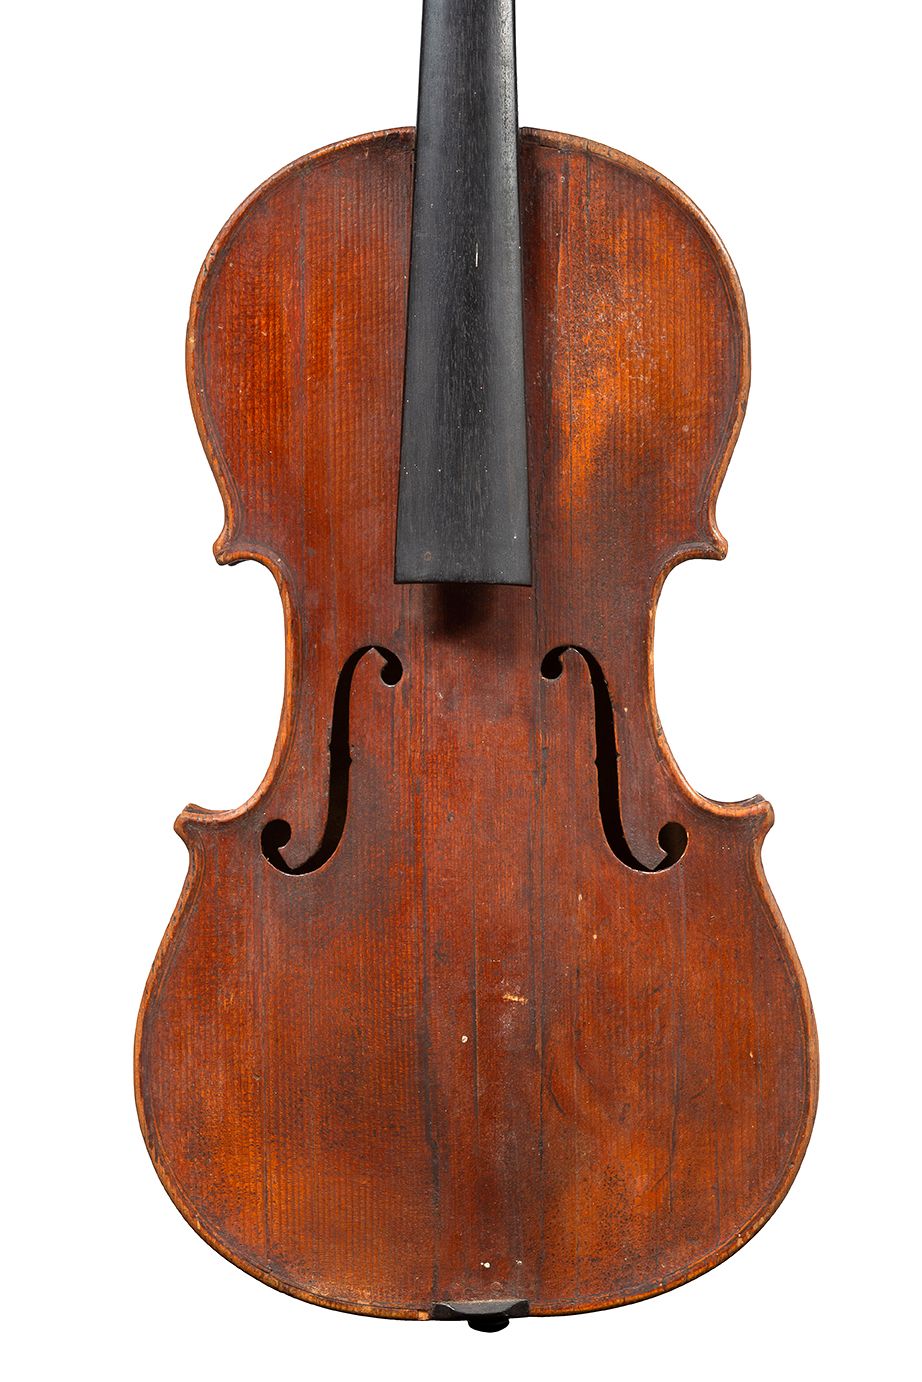 Null 1780年左右制作的法国小提琴
带有Nicolas Mathieu的铁印
顶部有多处断裂，包括一个断裂的琴心和一个断裂的琴杆，背面有撕裂痕迹 
背面有&hellip;